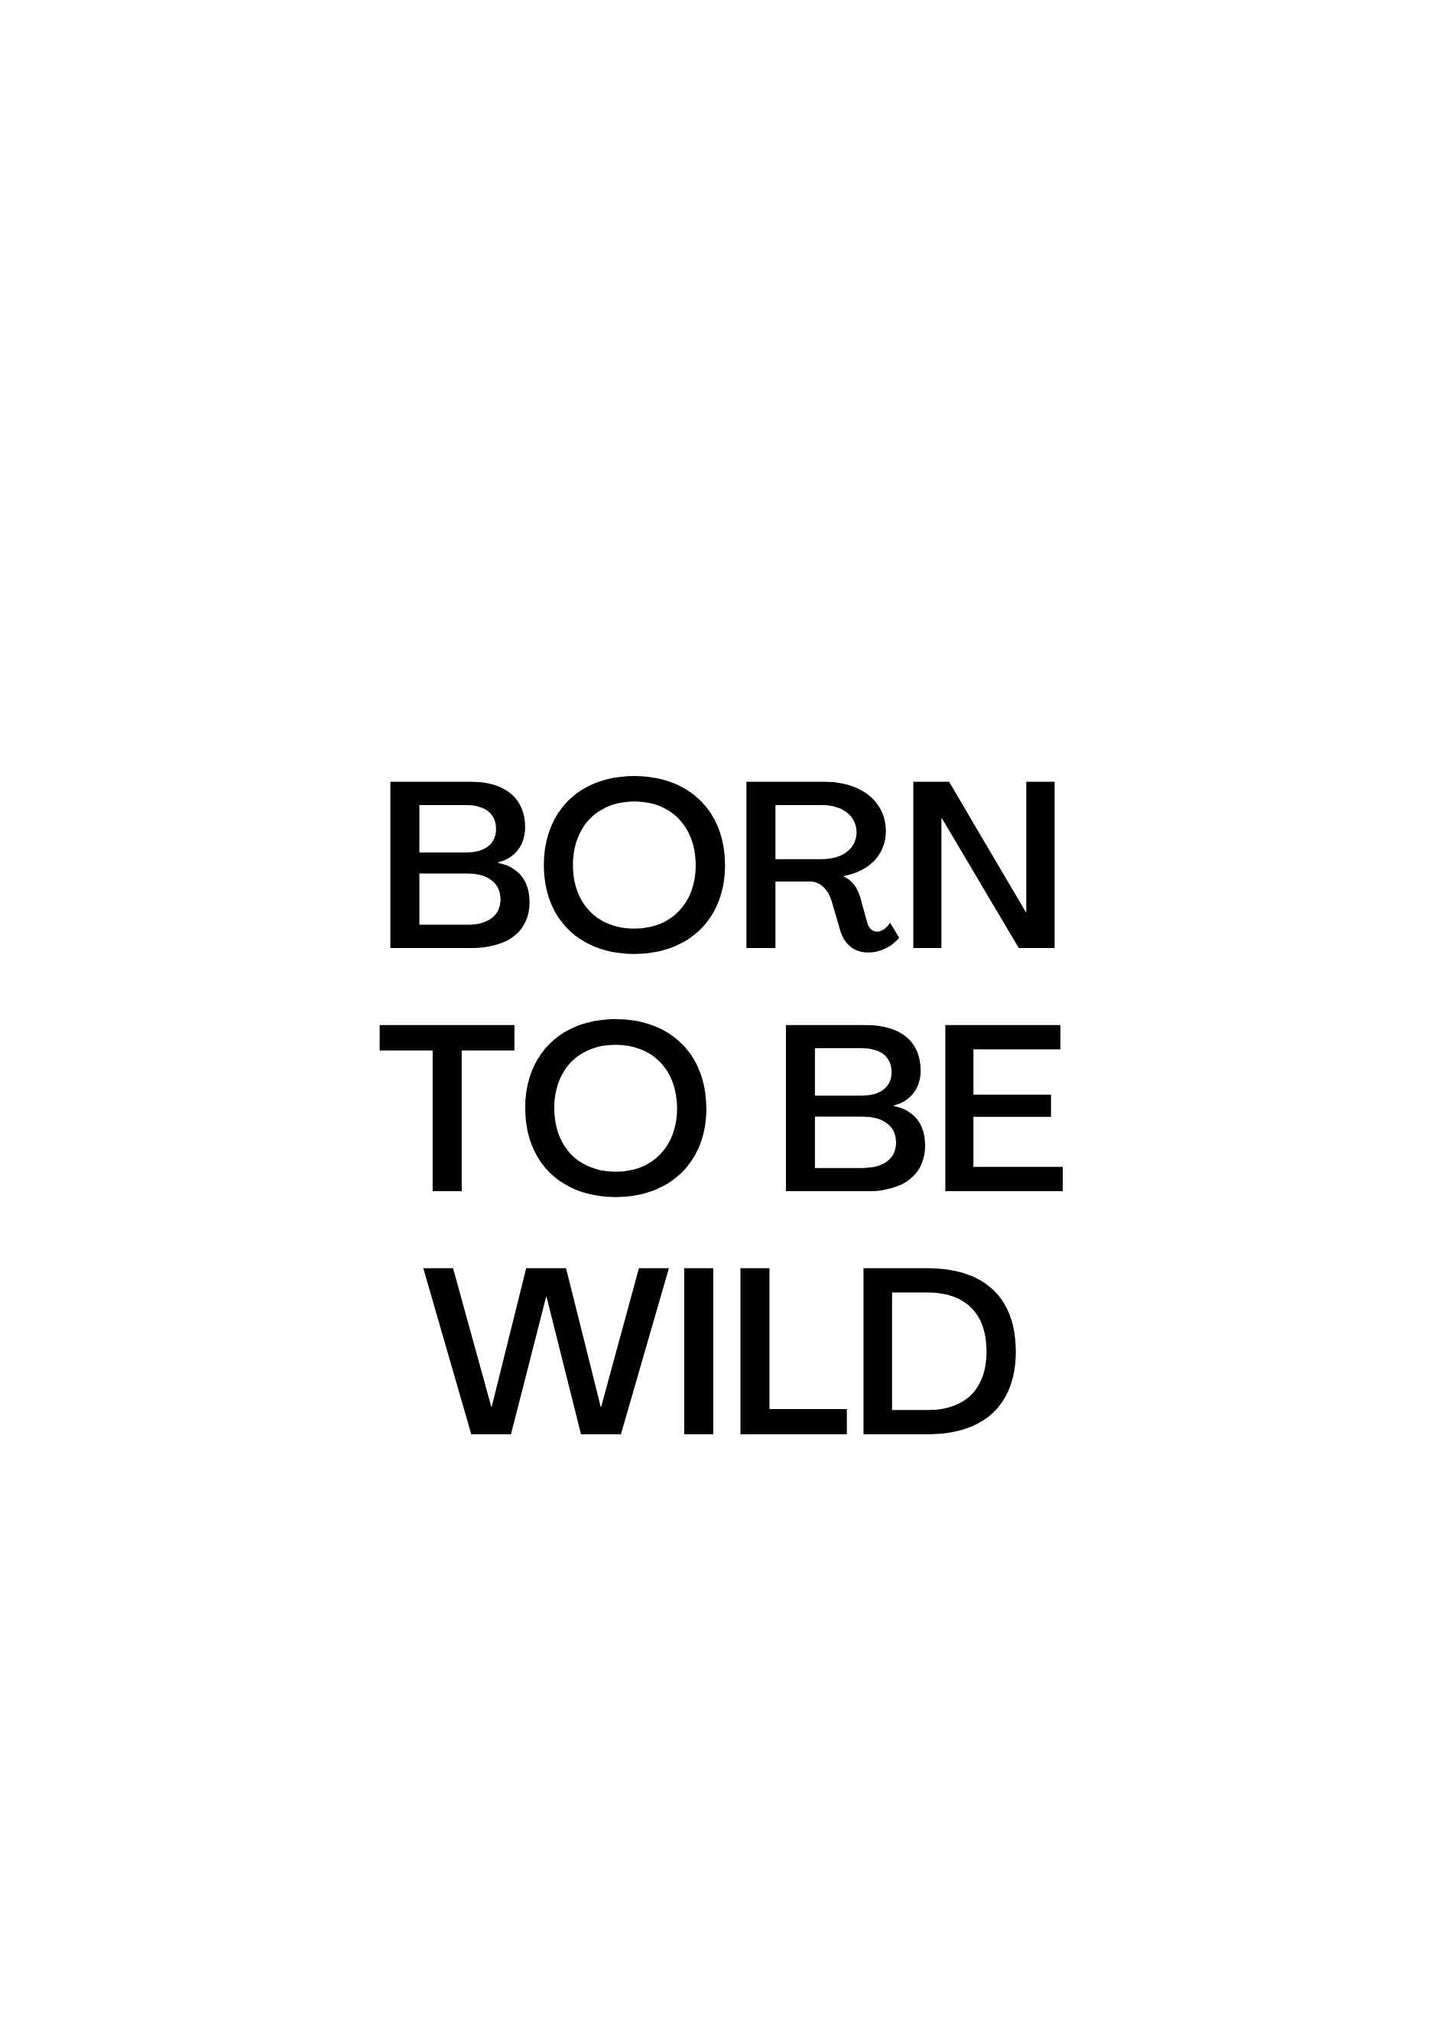 Barncitat Born to be wild barnposter